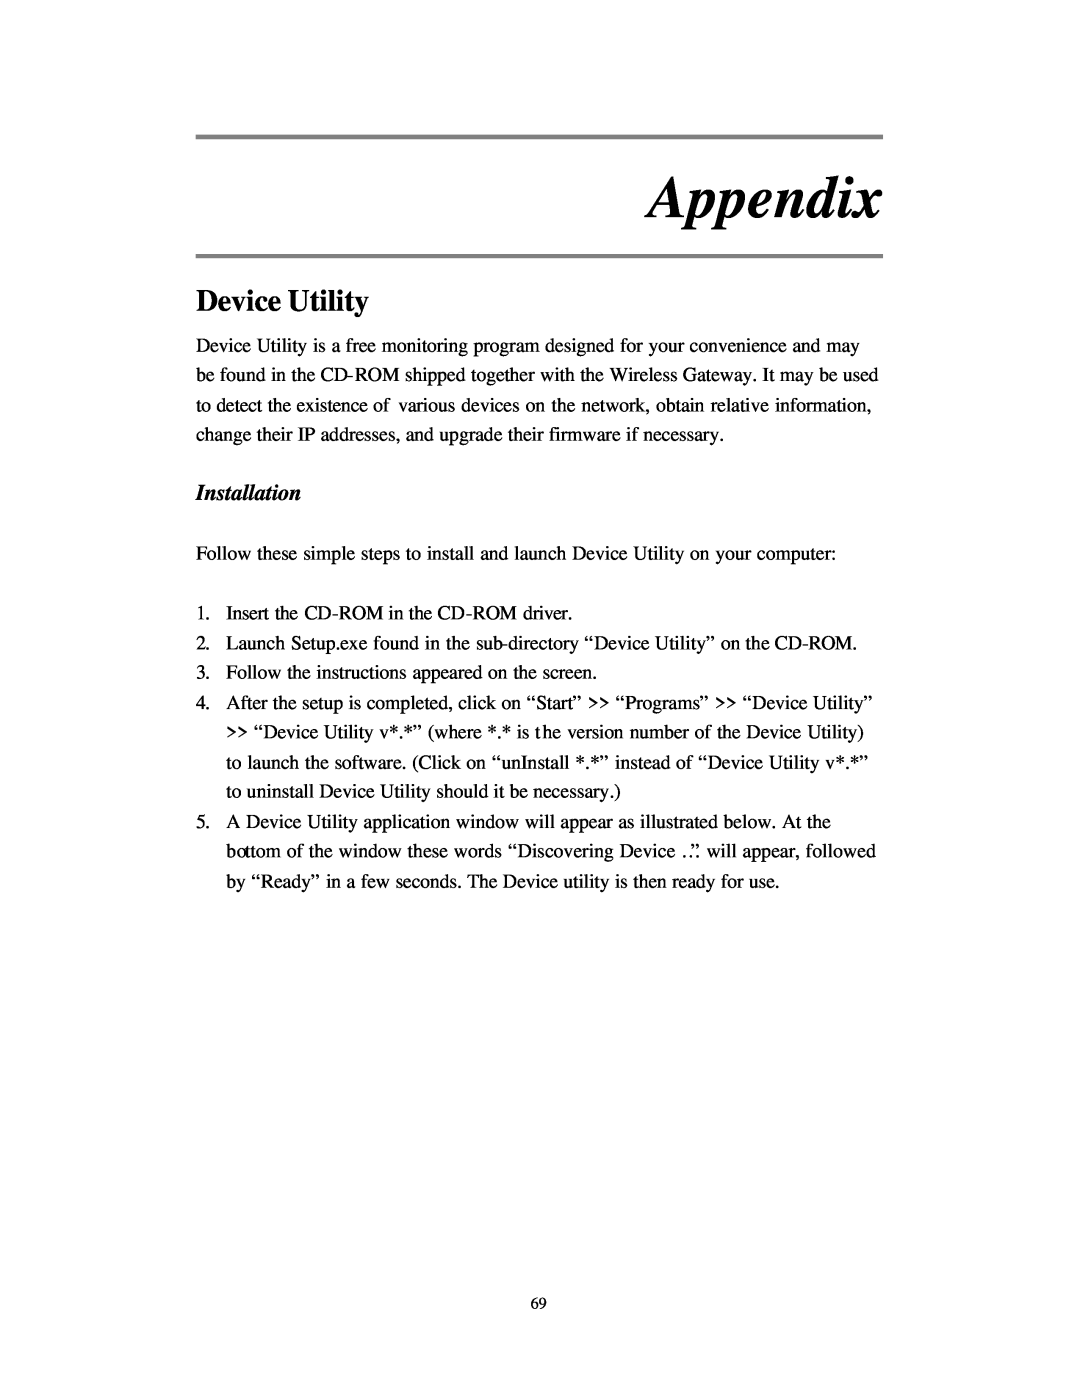 Nlynx Wireless Gateway manual Appendix, Device Utility, Installation 